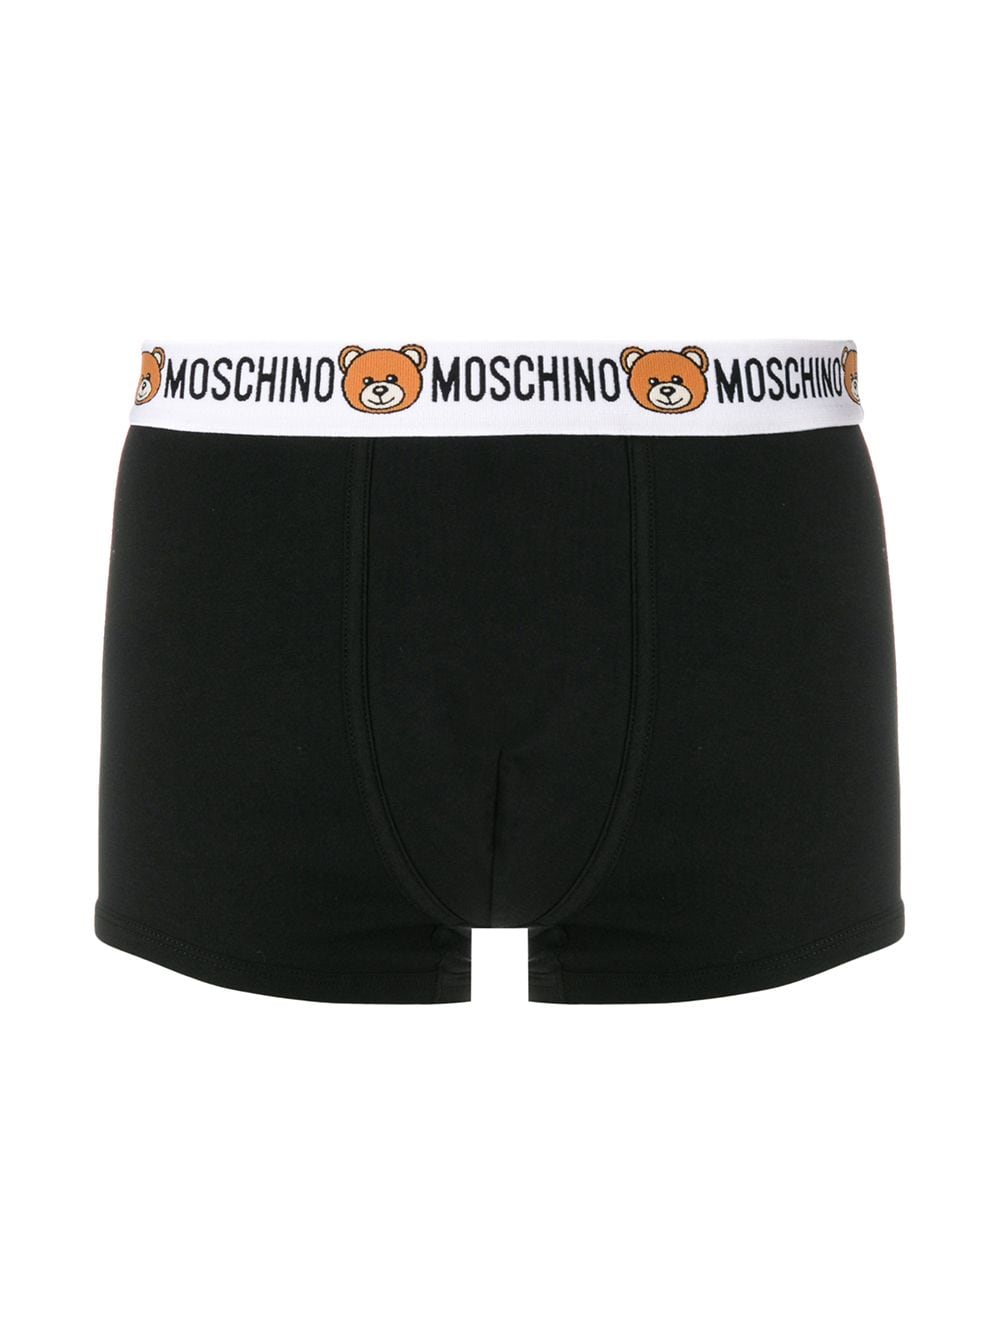 Moschino Underwear & Socks for Men - Shop Now on FARFETCH